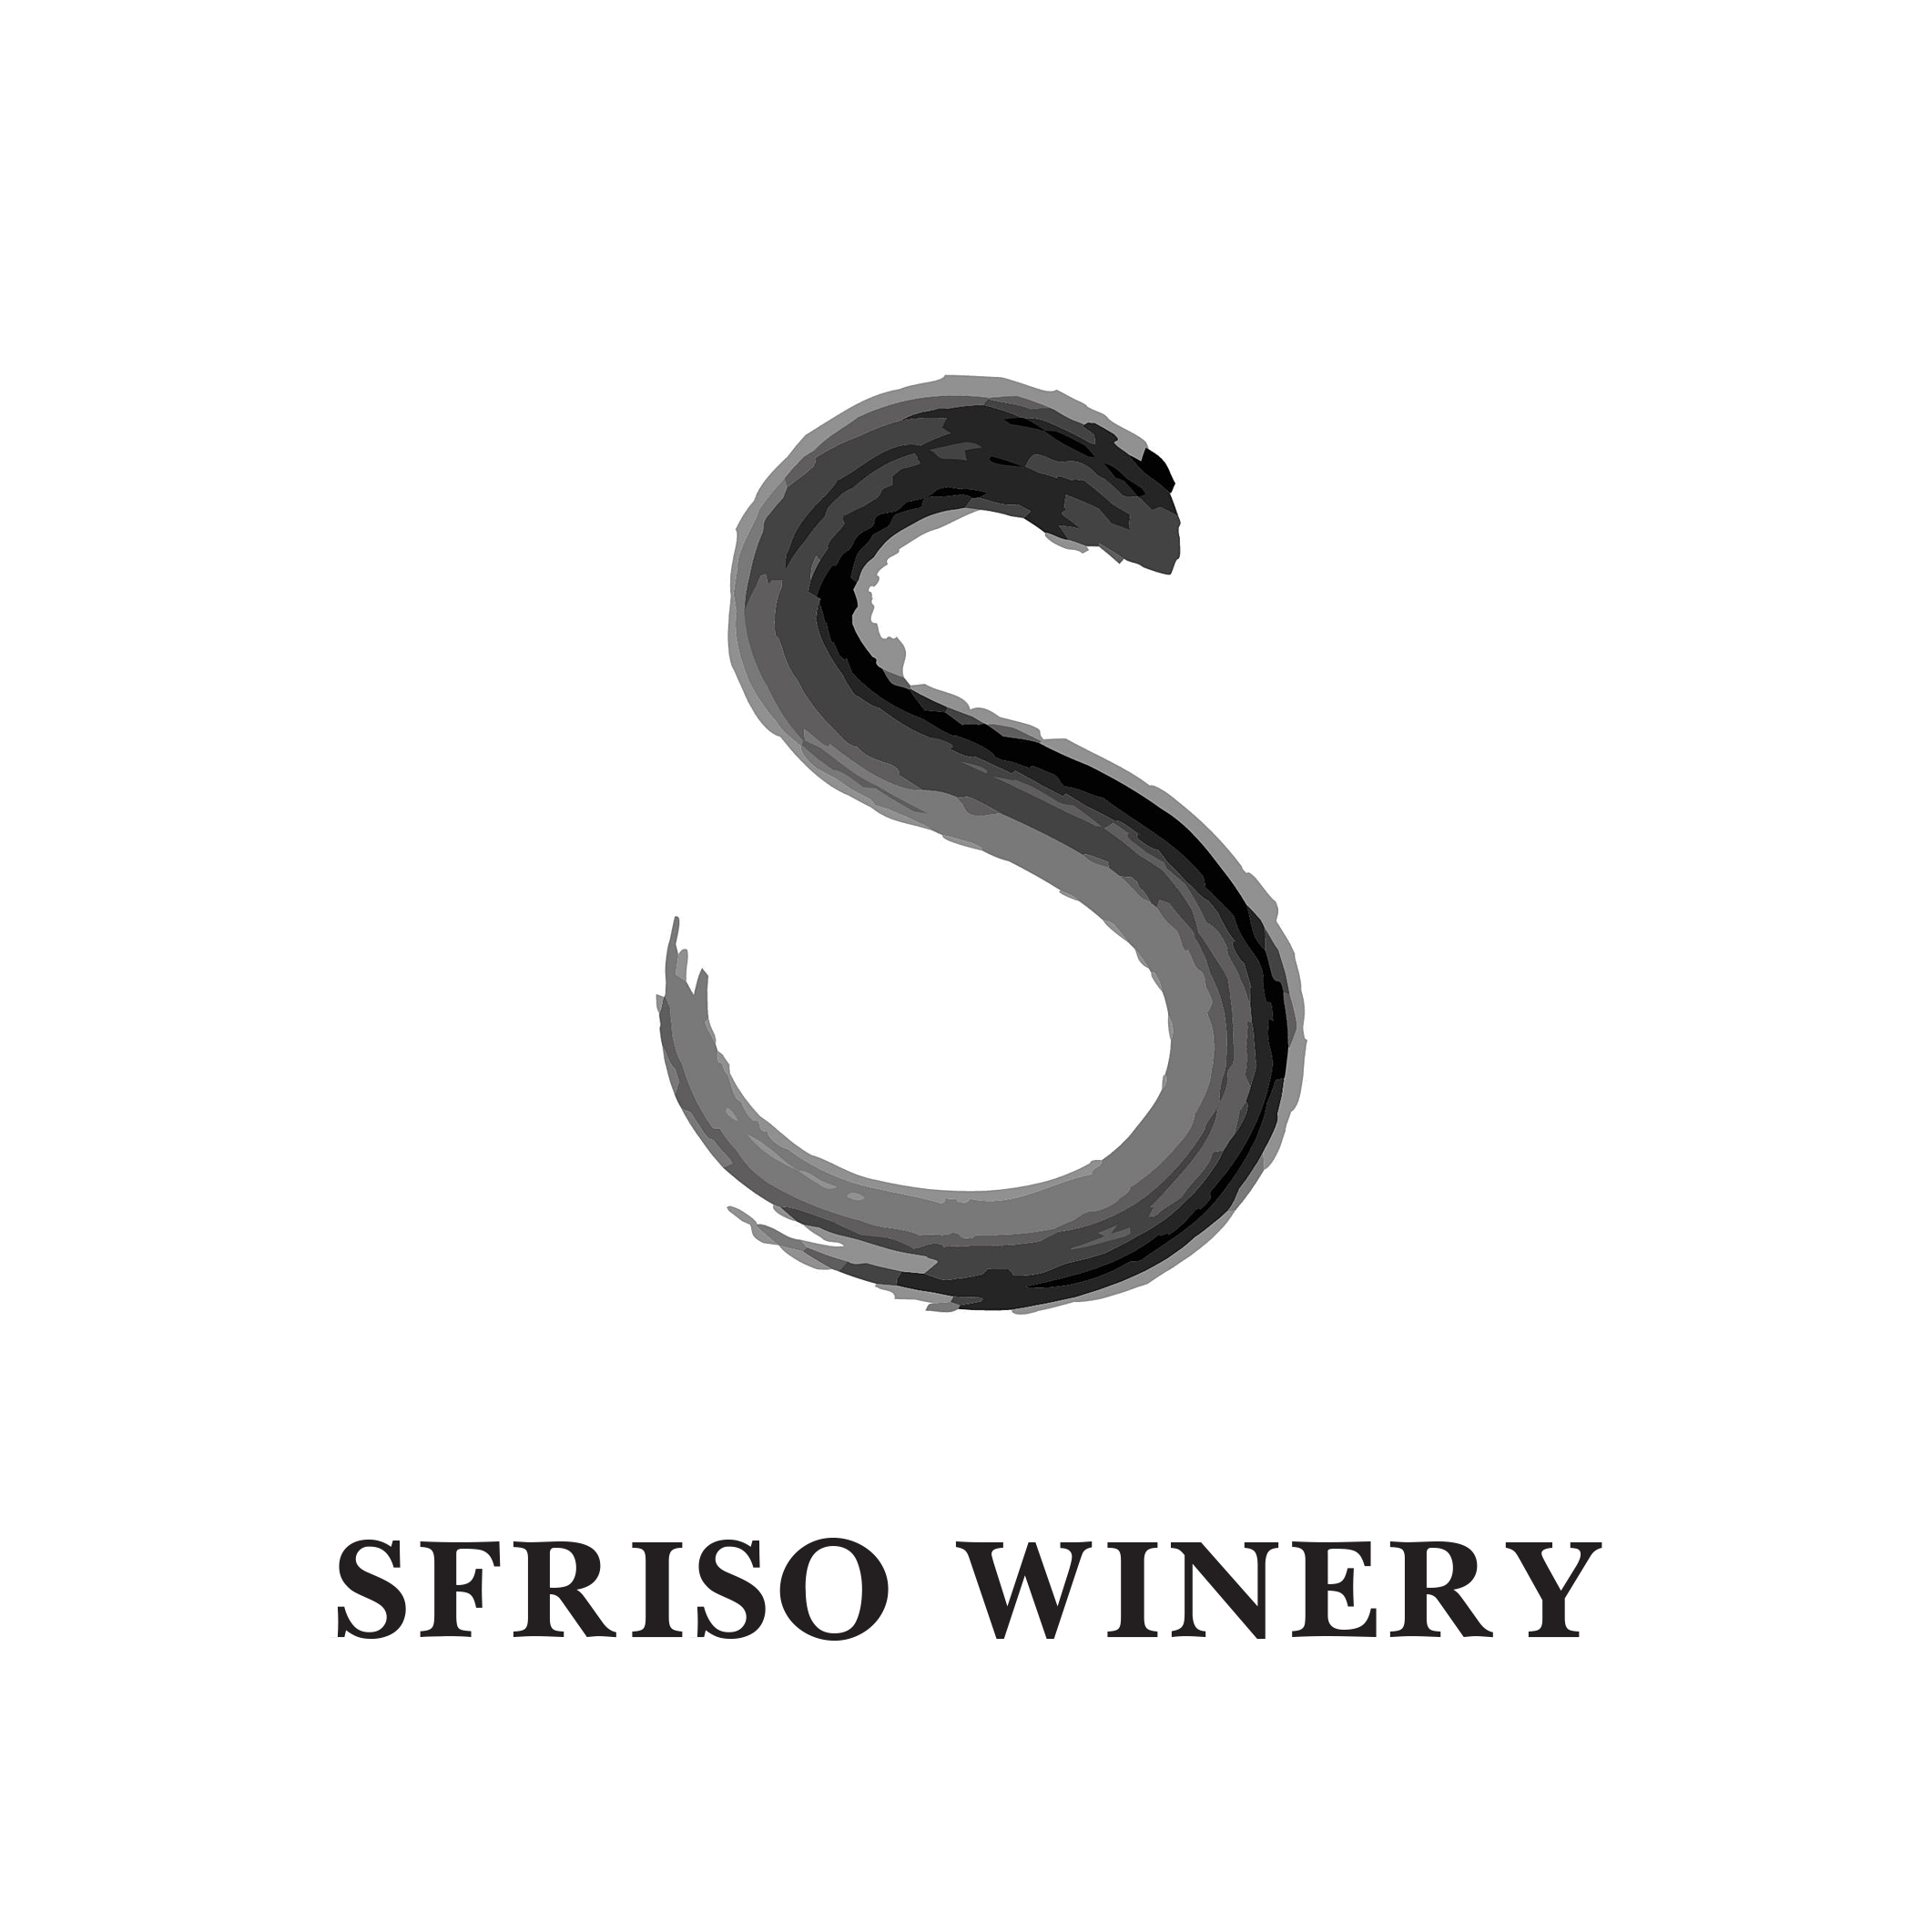 Sfriso Winery Logo for Media